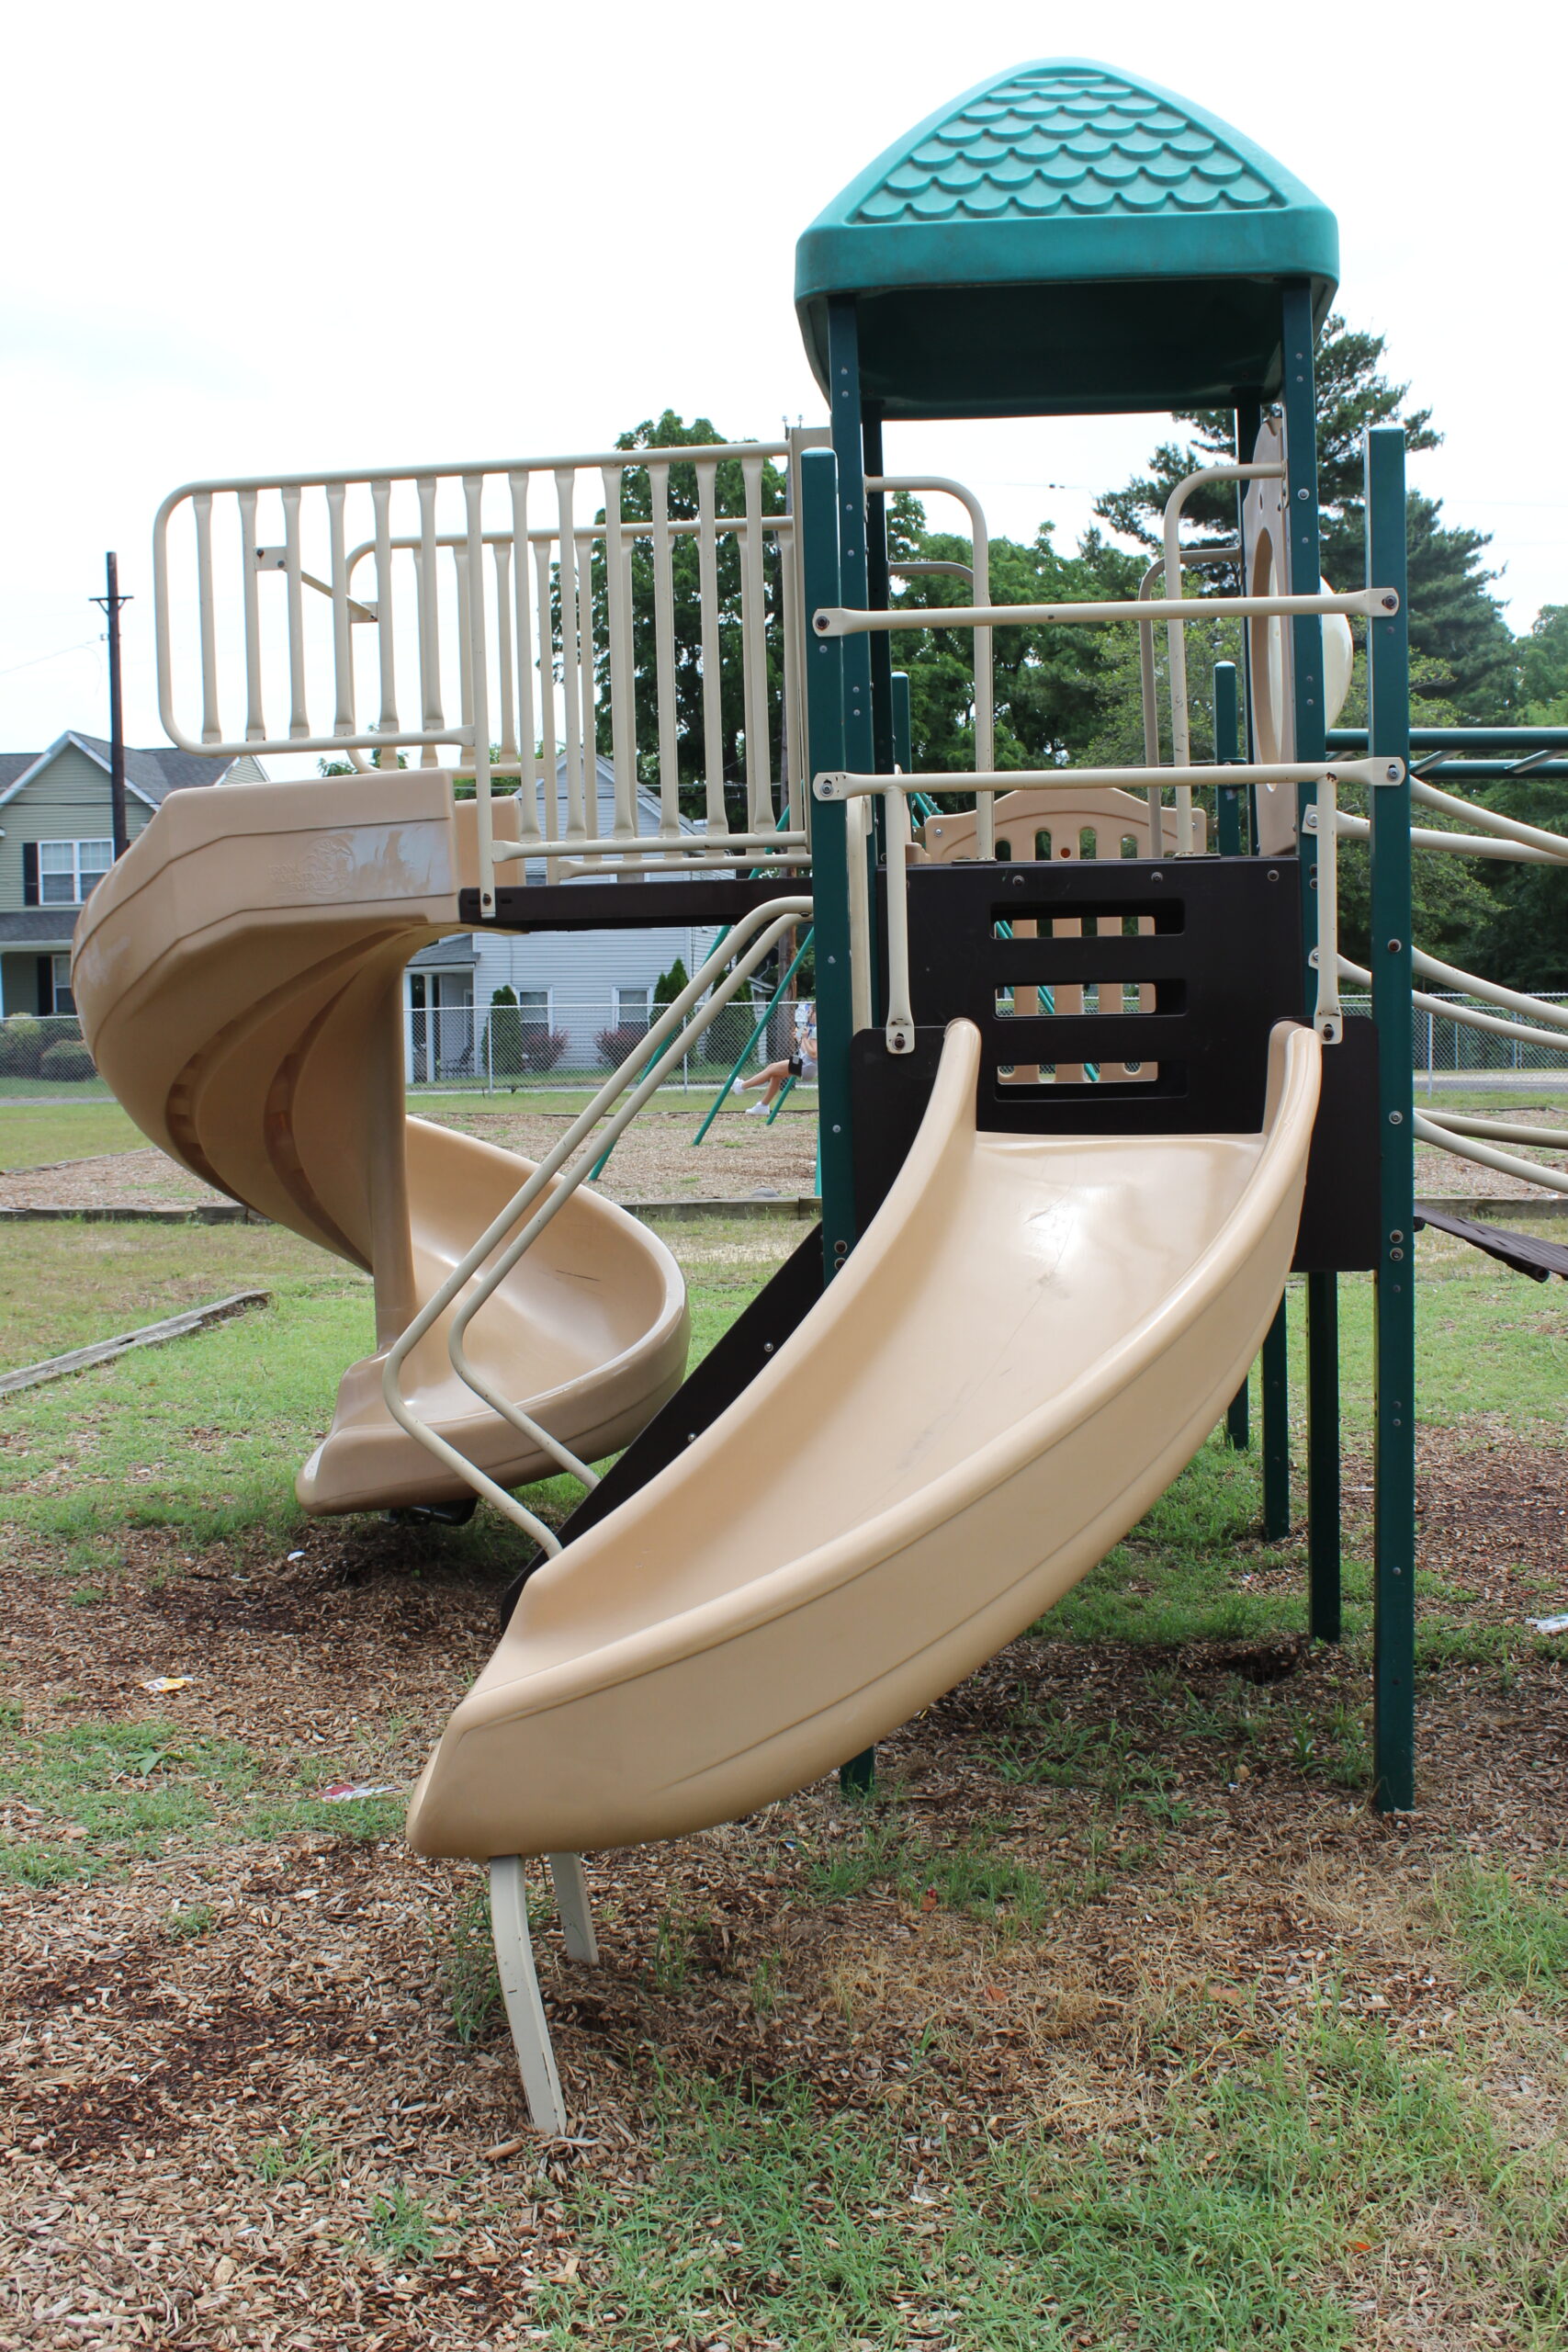 Friendship Park Playground in Millville NJ - SLIDE - curvy slide